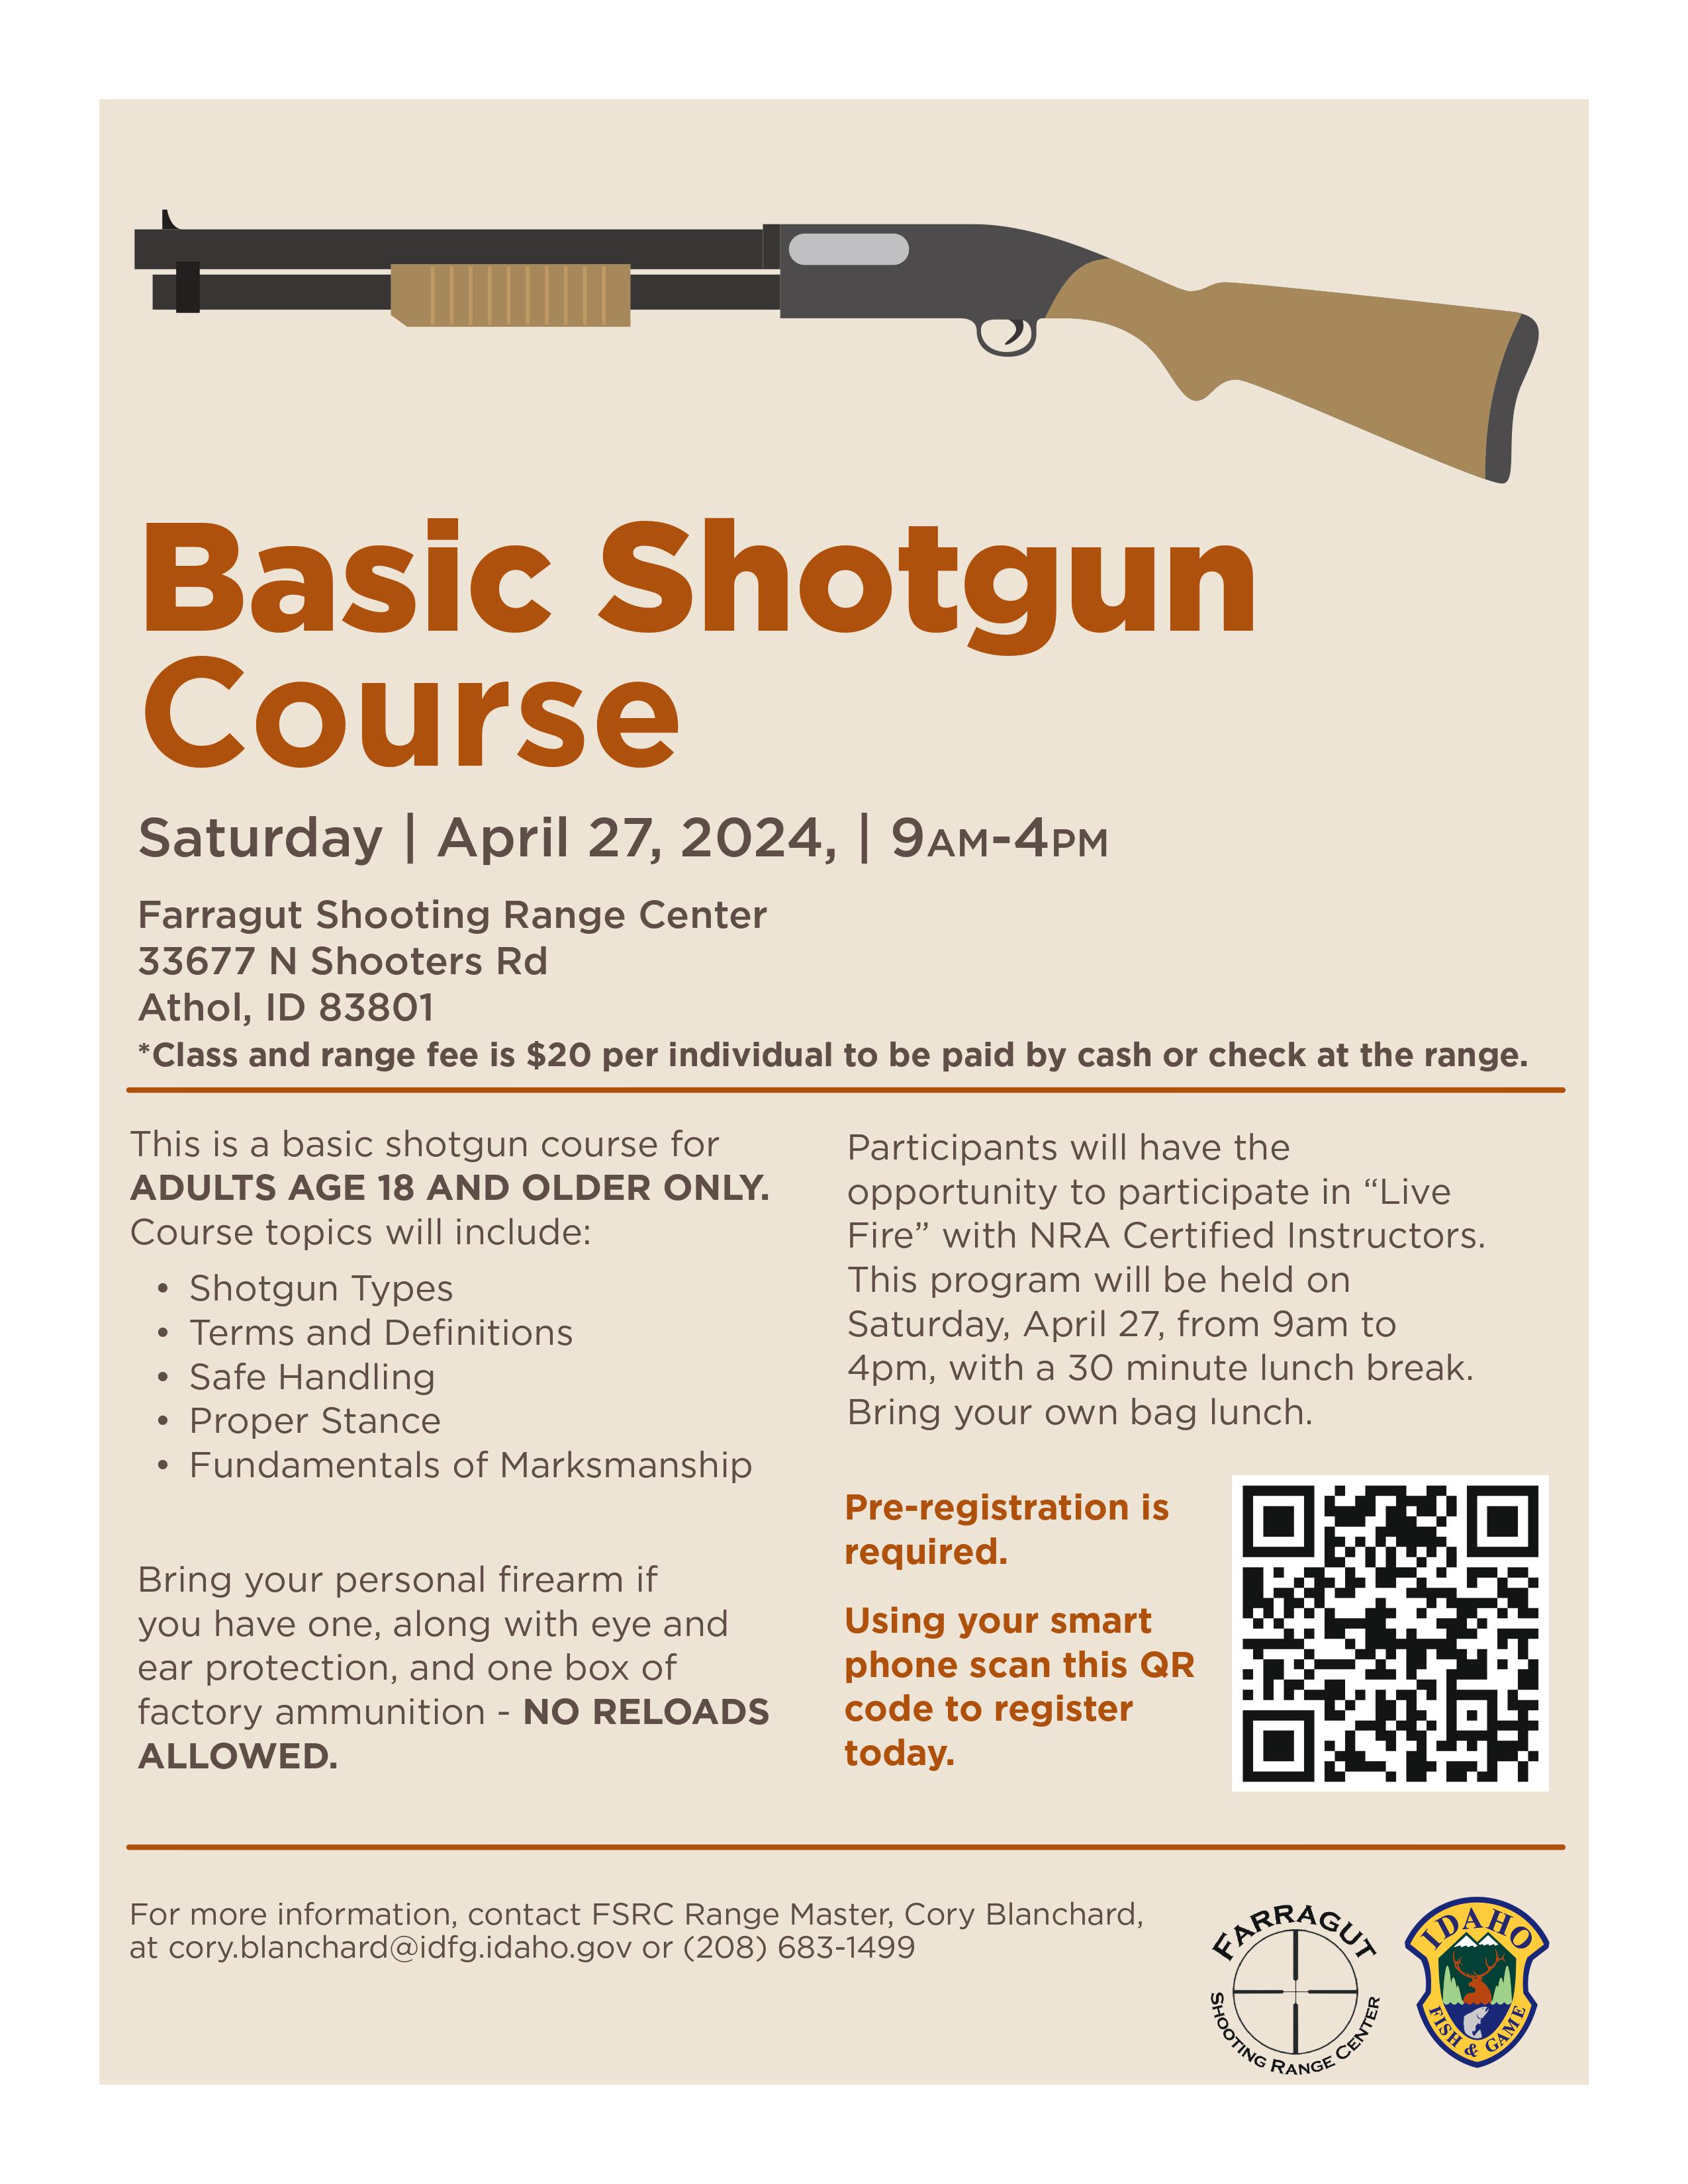 Basic Shotgun course flyer at the Farragut Shooting Range Center